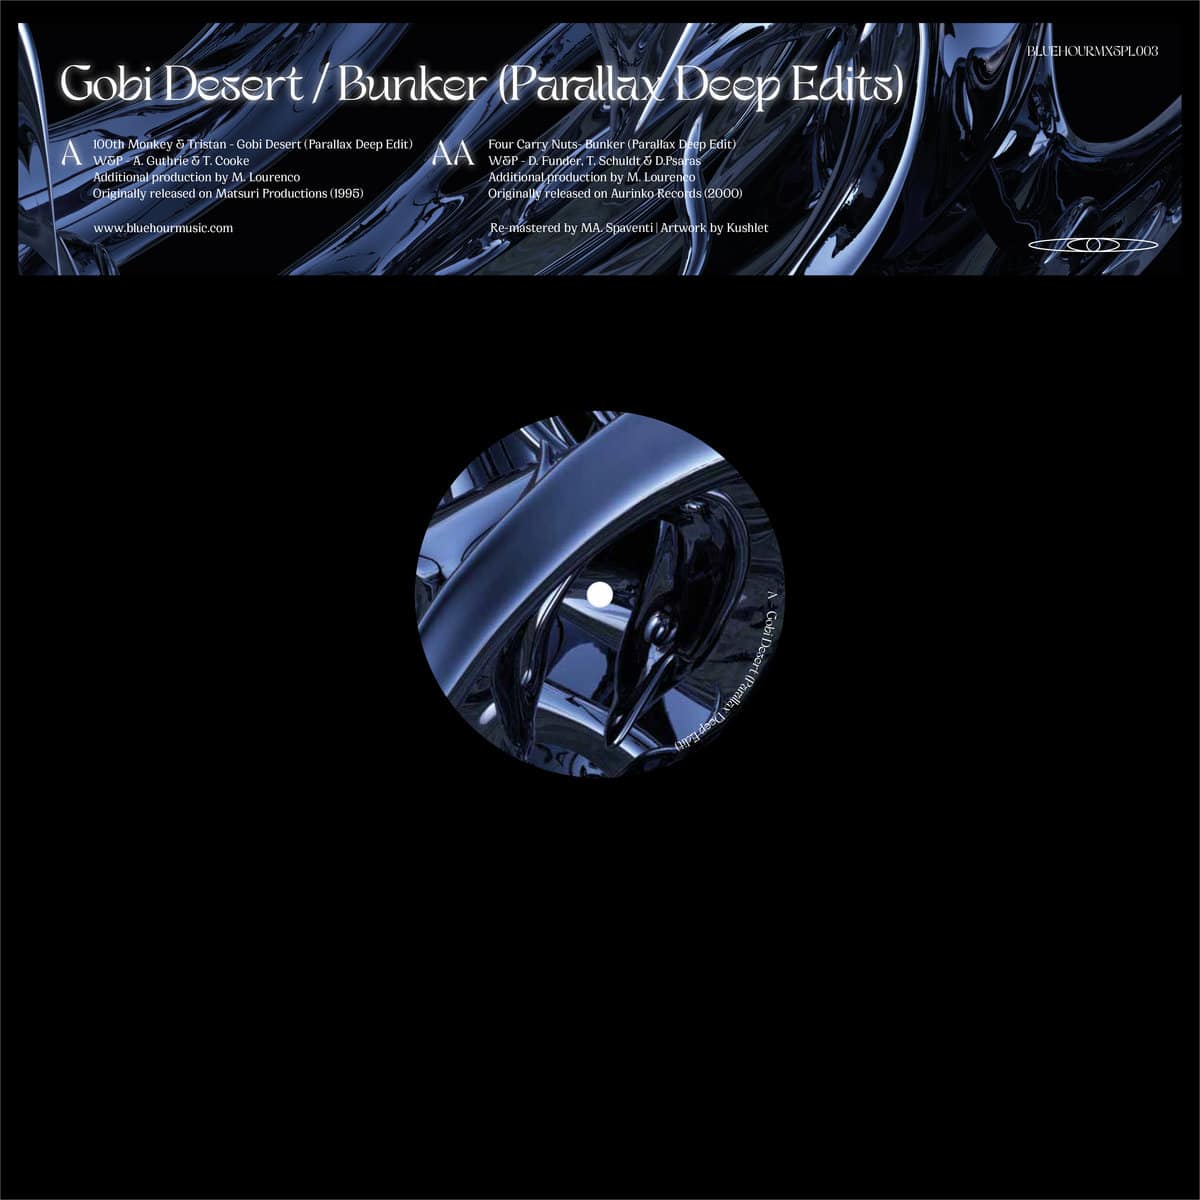 image cover: Gobi Desert/Bunker(Parallax Deep Edits) by Various Artists on Blue Hour